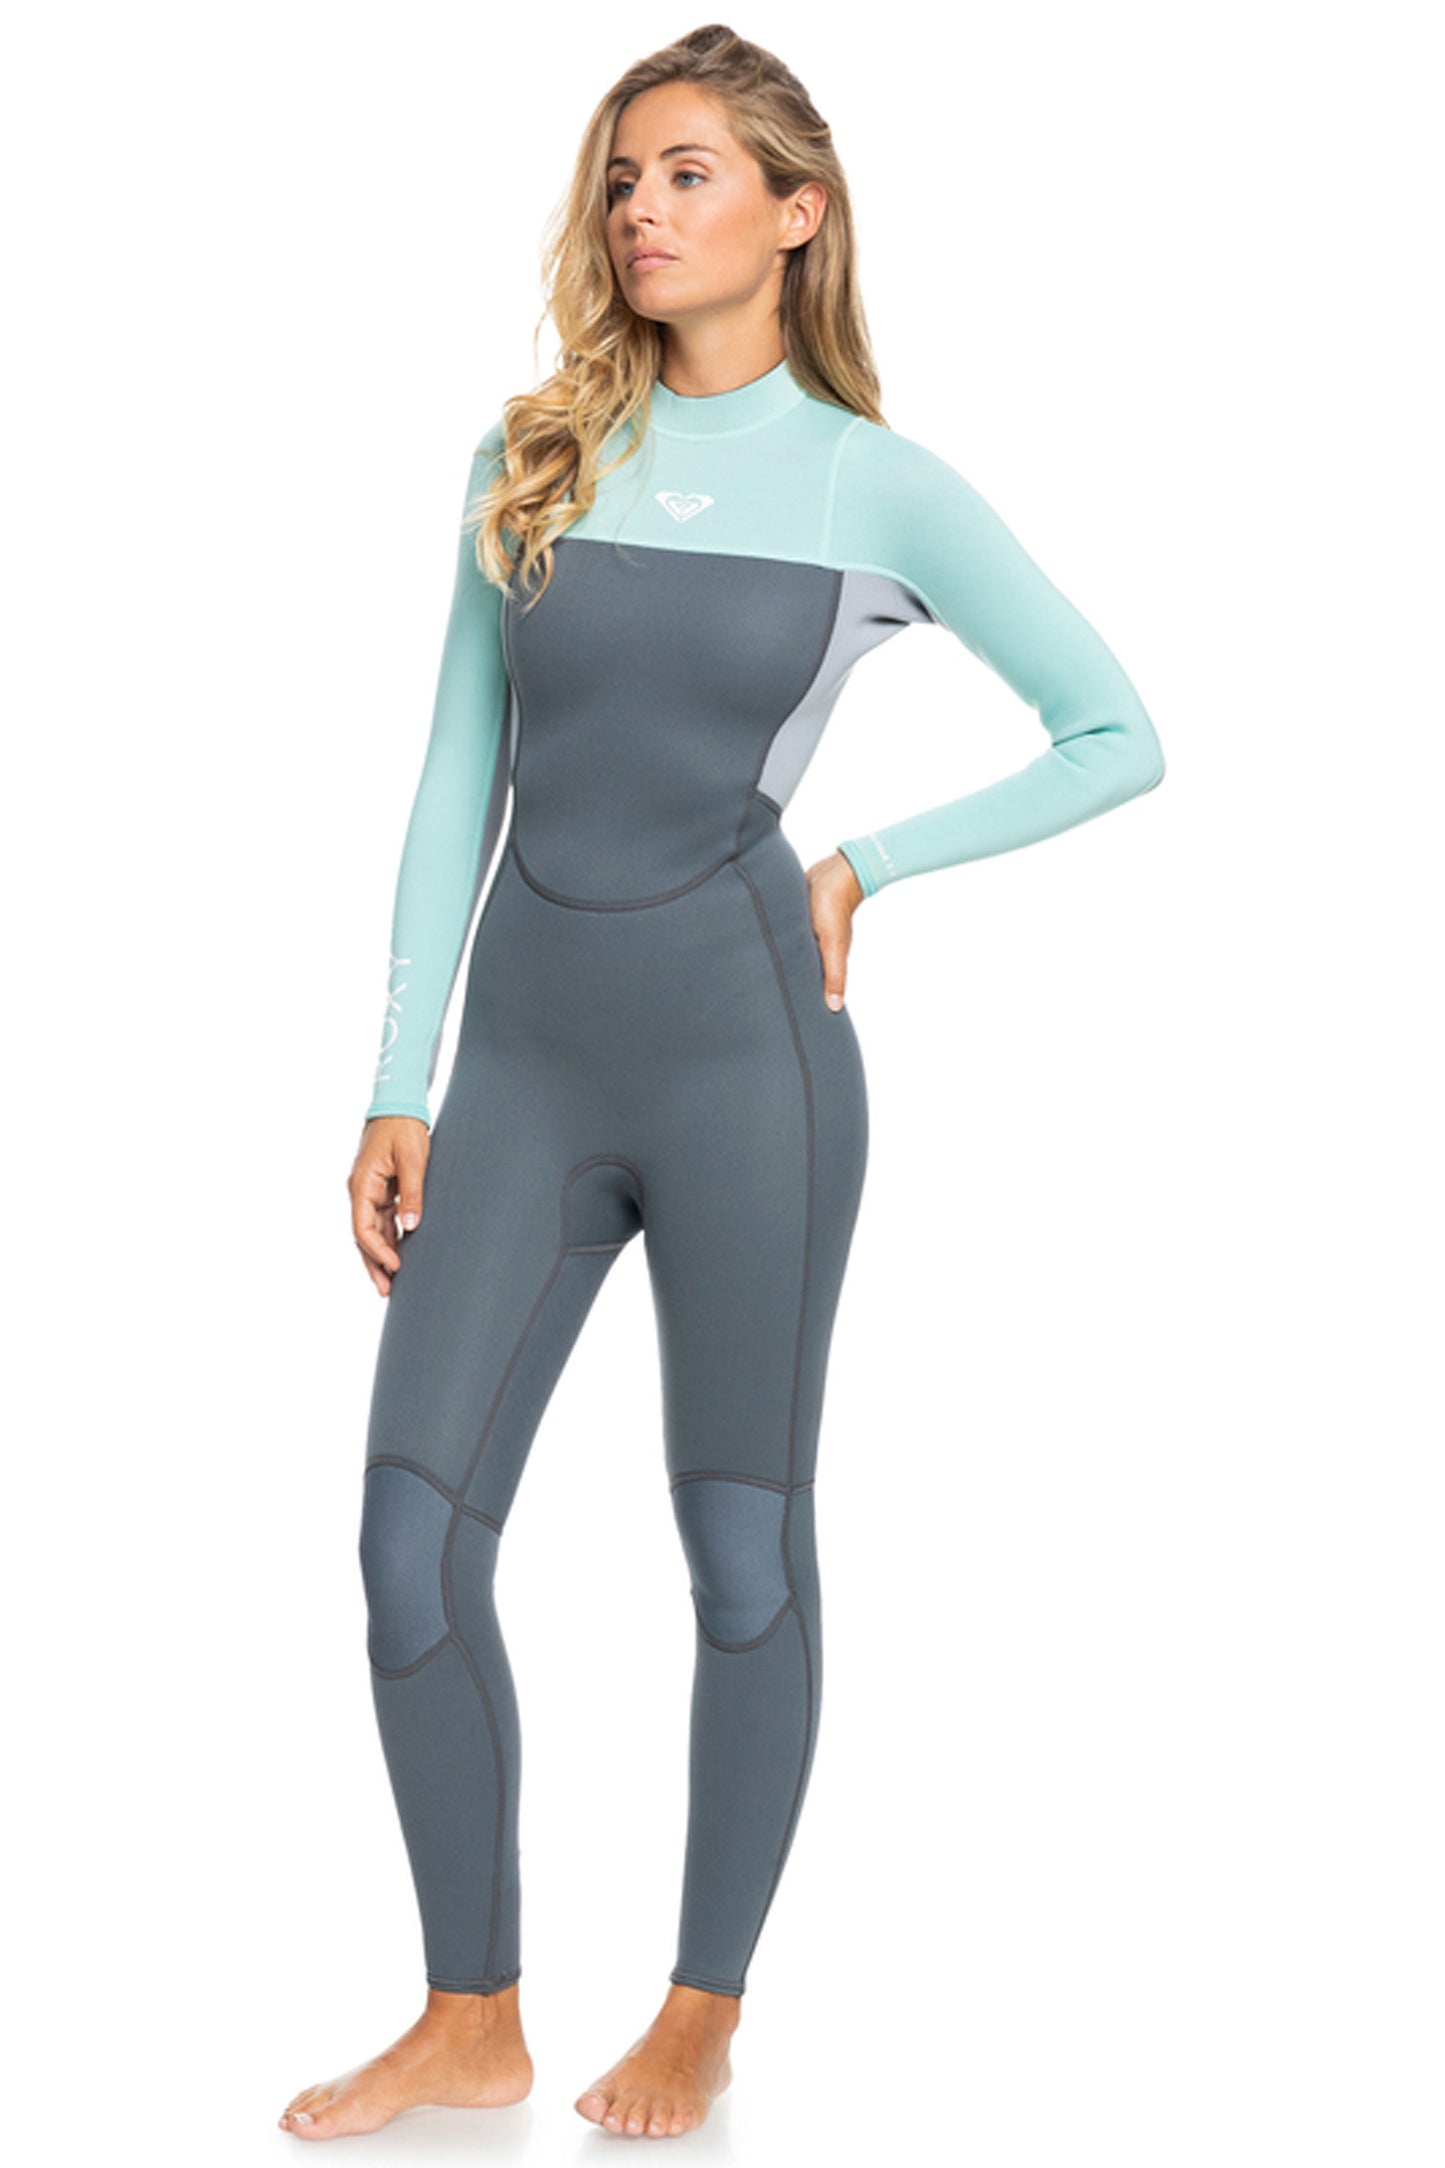 Pukas-Surf-Shop-Quicksilver-wetsuit-woman-prologue-3-2-ice-green